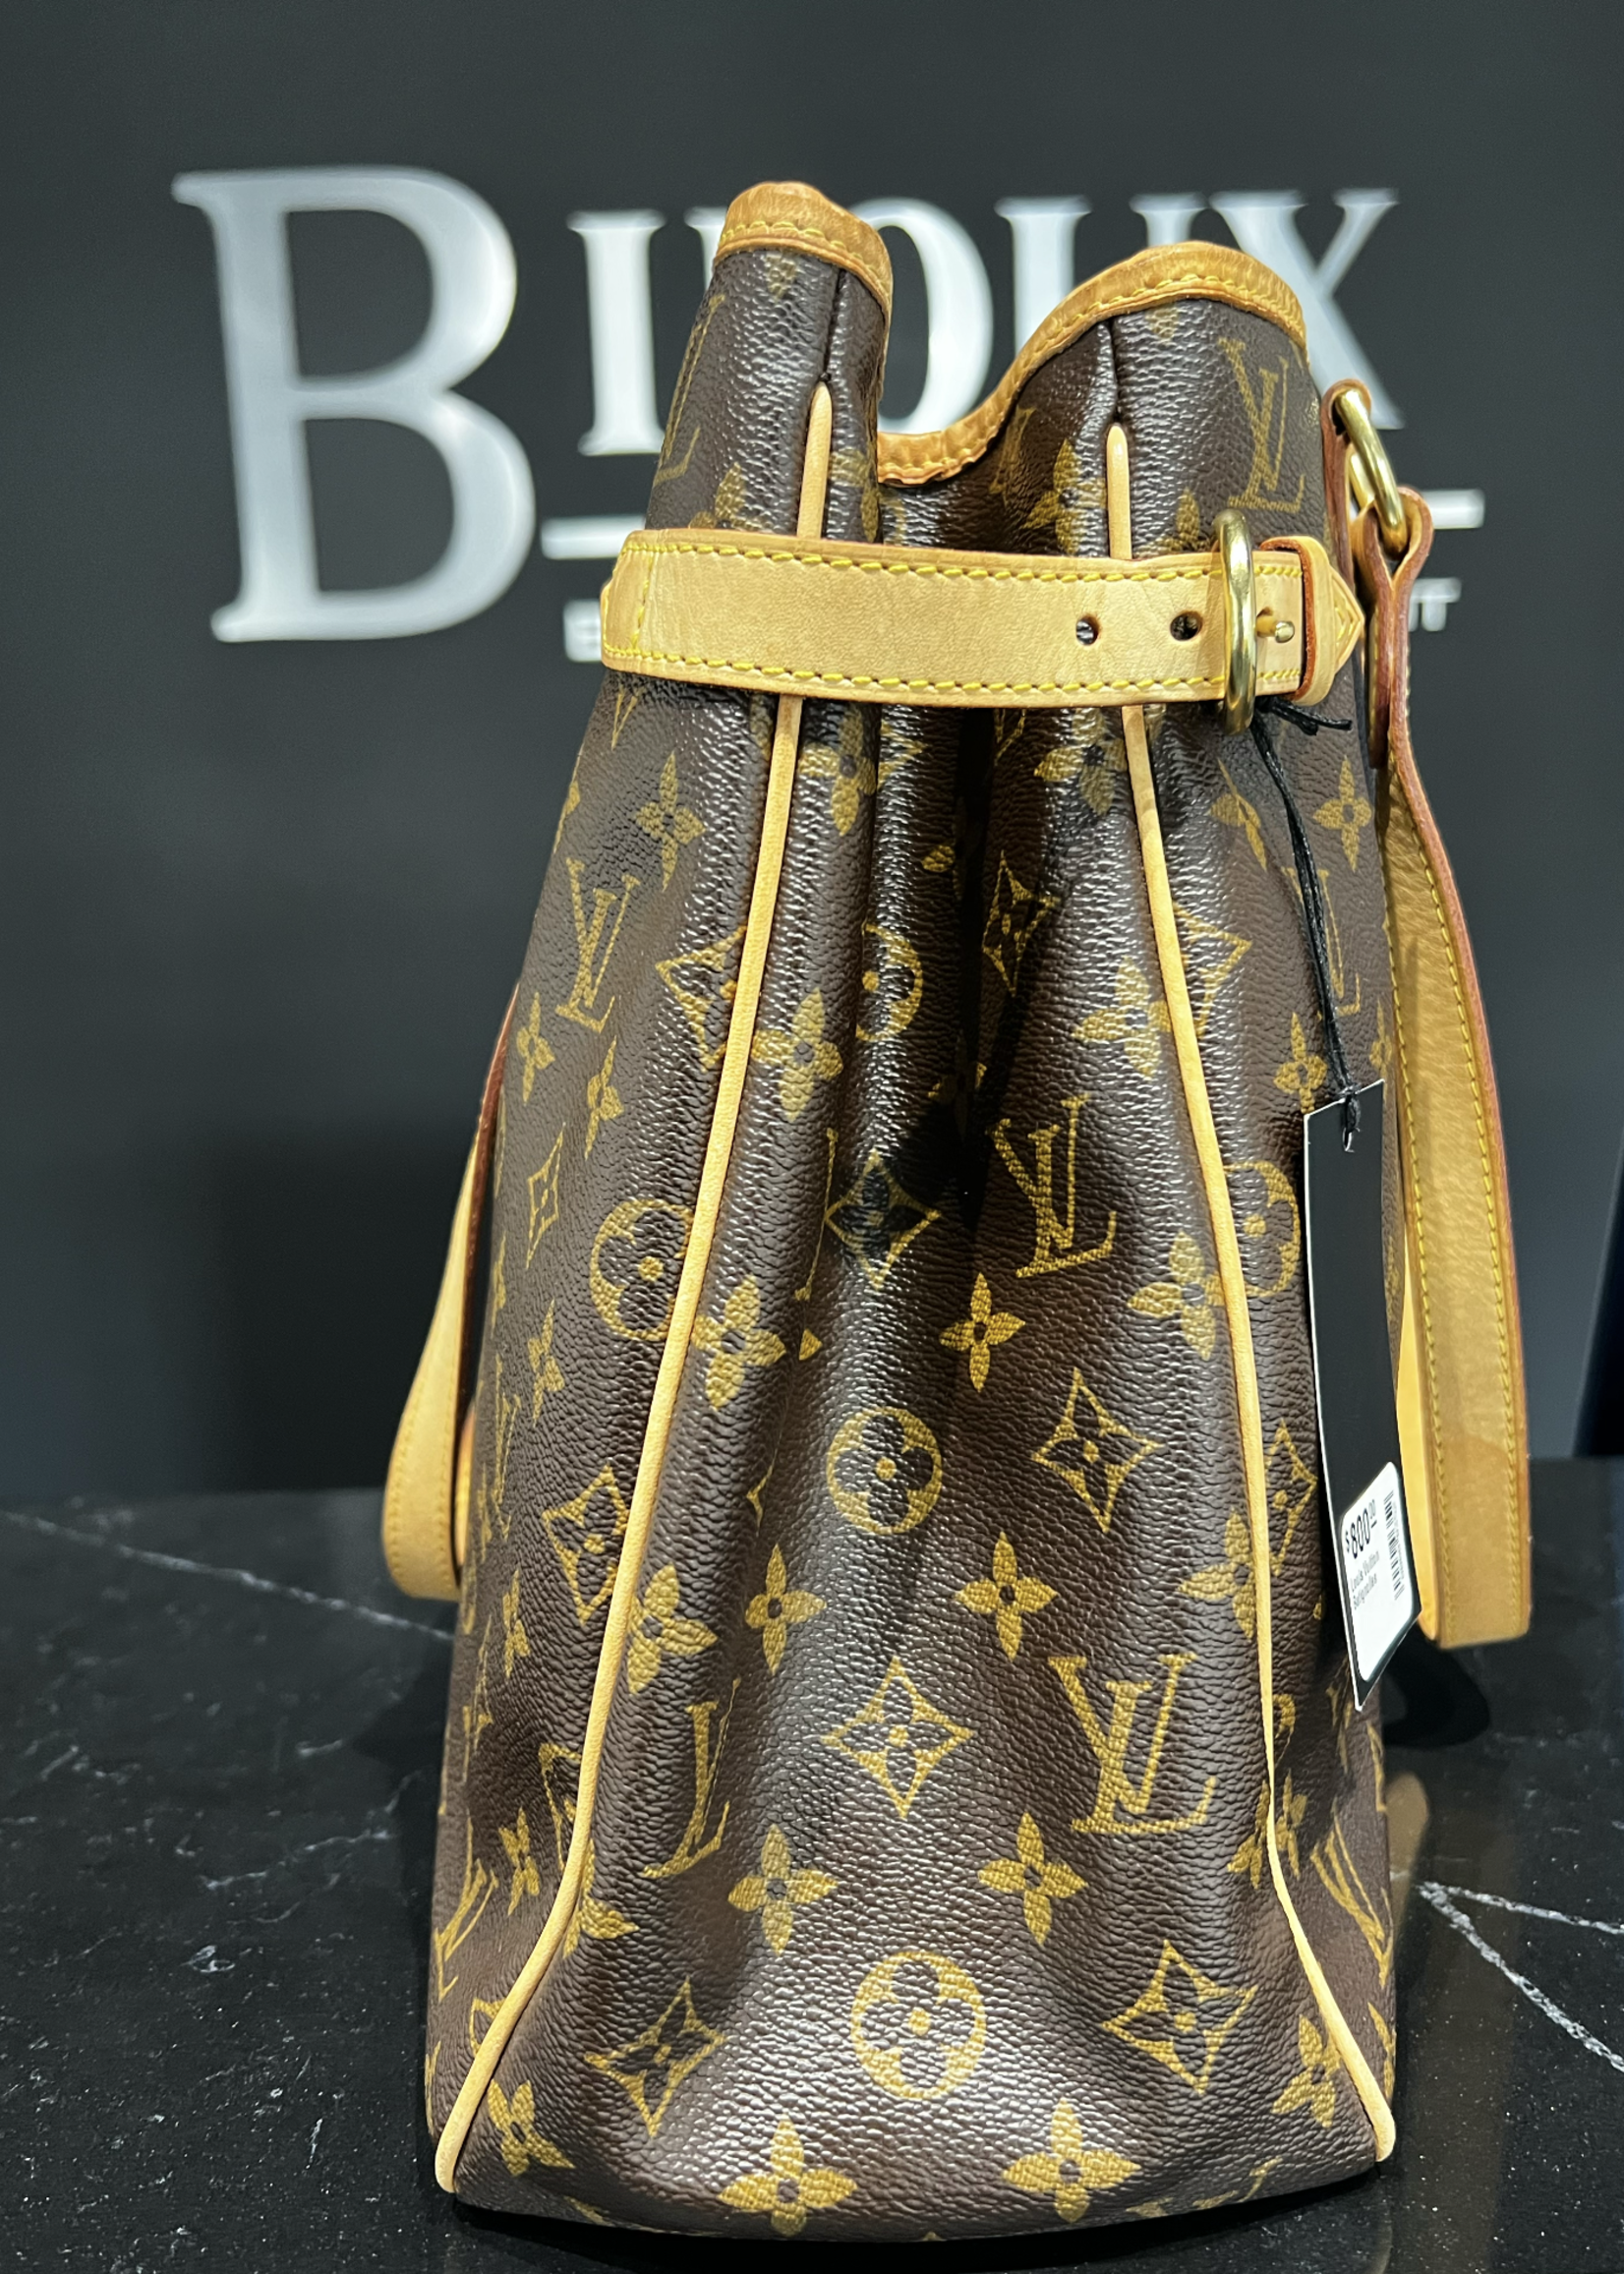 Louis Vuitton Batignolles - Bijoux Bag Spa & Consignment